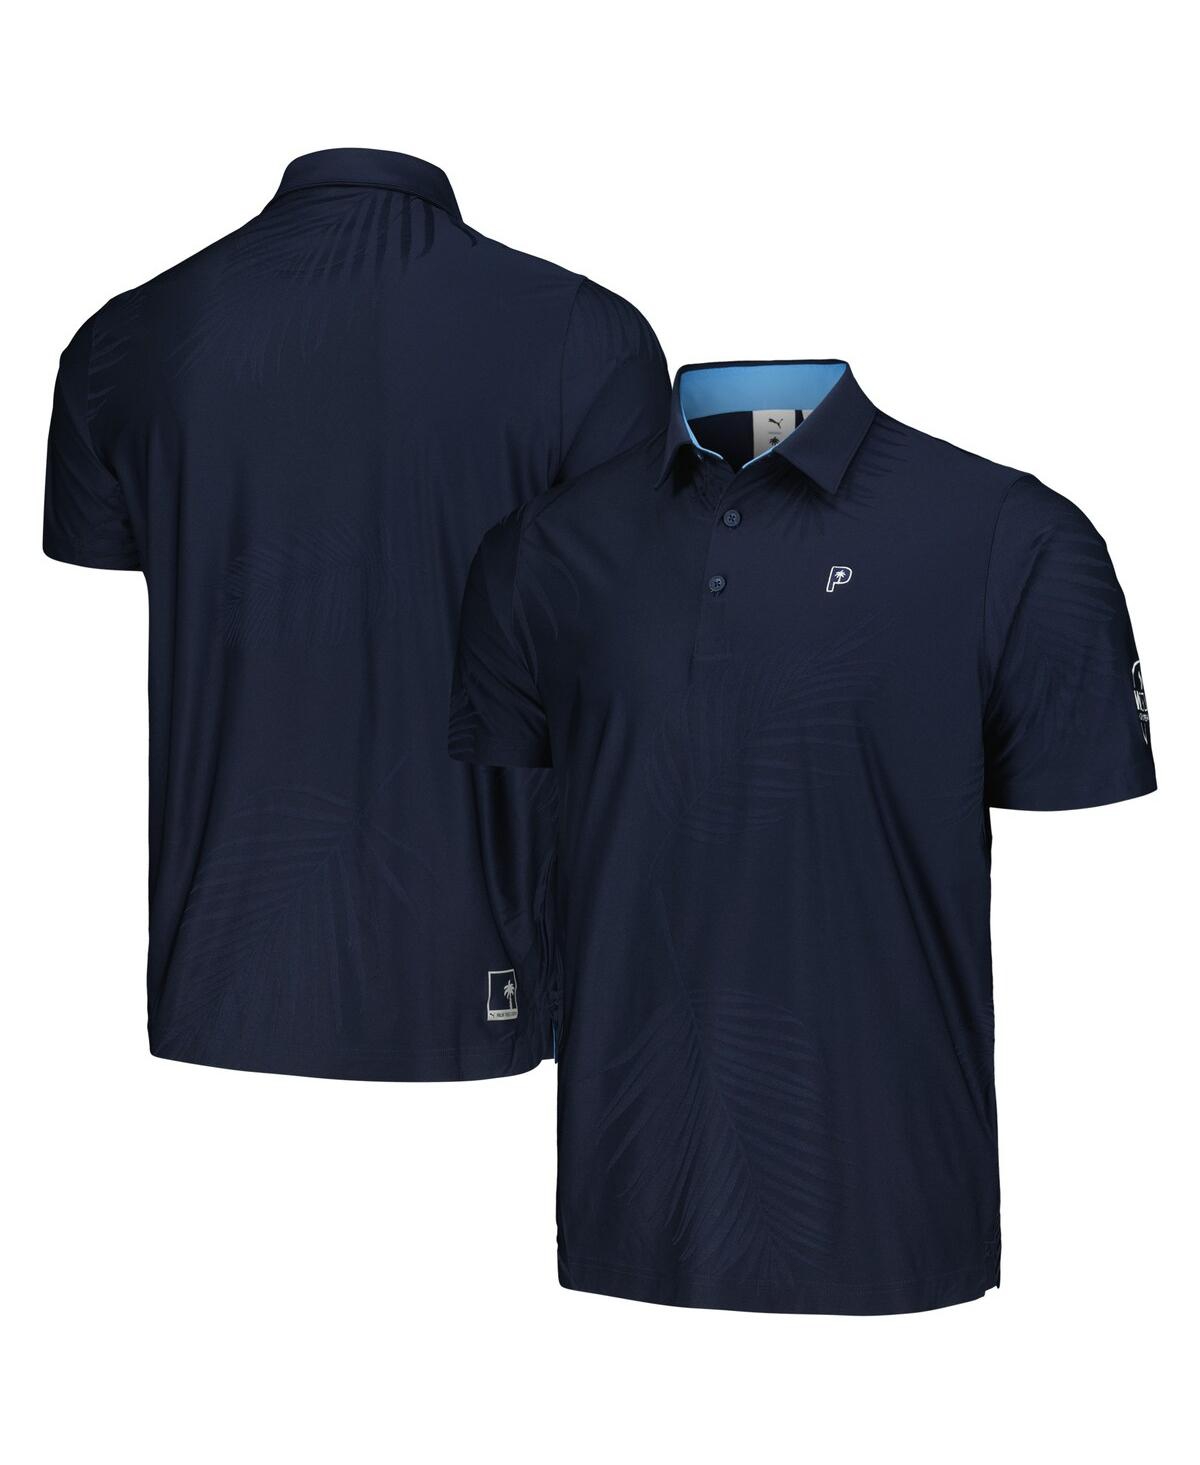 Shop Puma Men's  X Ptc Navy Wm Phoenix Open Jacquard Mattr Polo Shirt